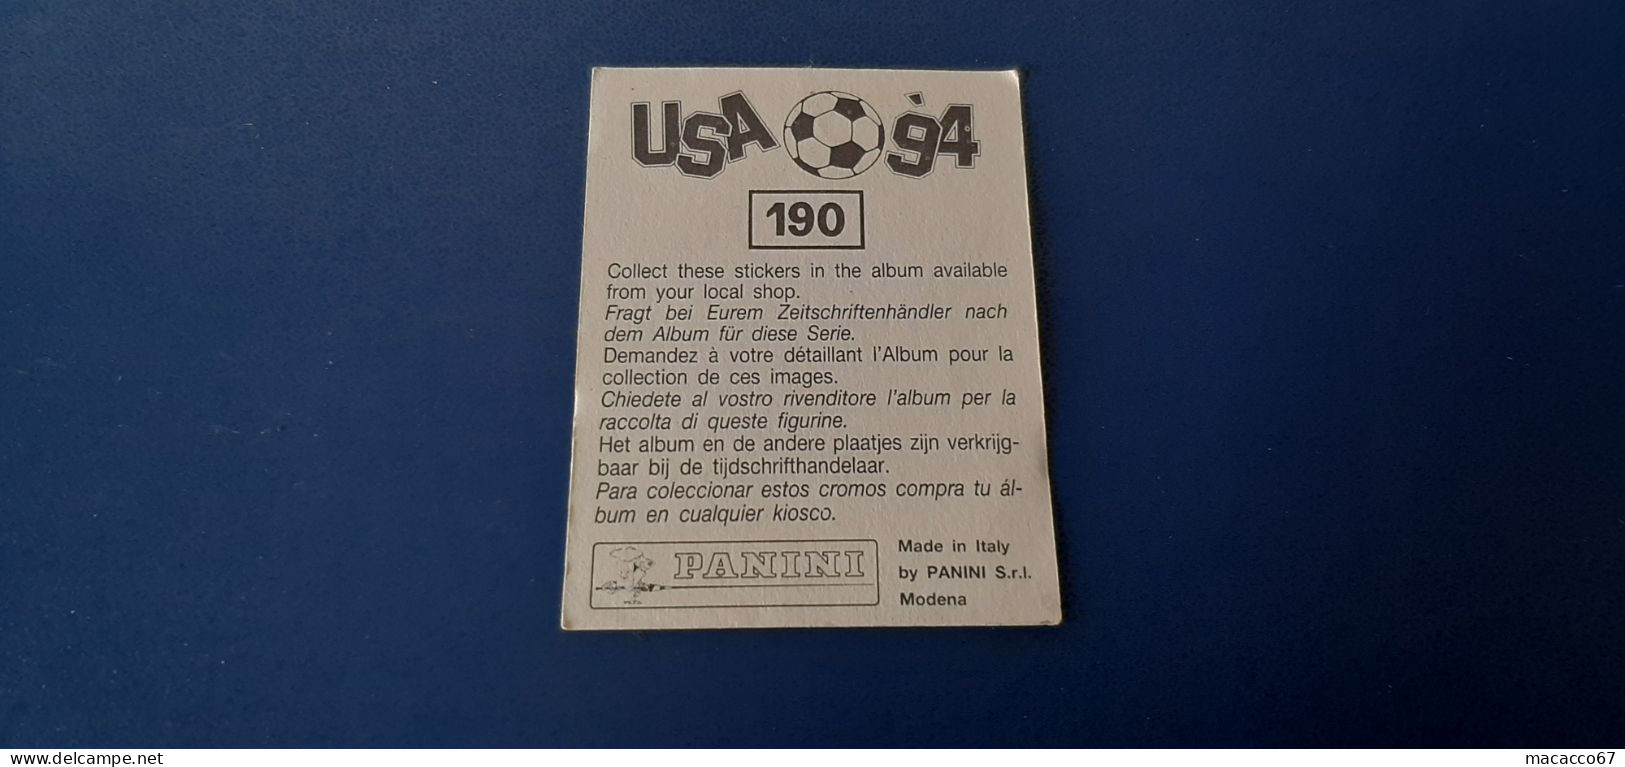 Figurina Panini WM USA 94 - 190 Alcorta Spagna - Italienische Ausgabe